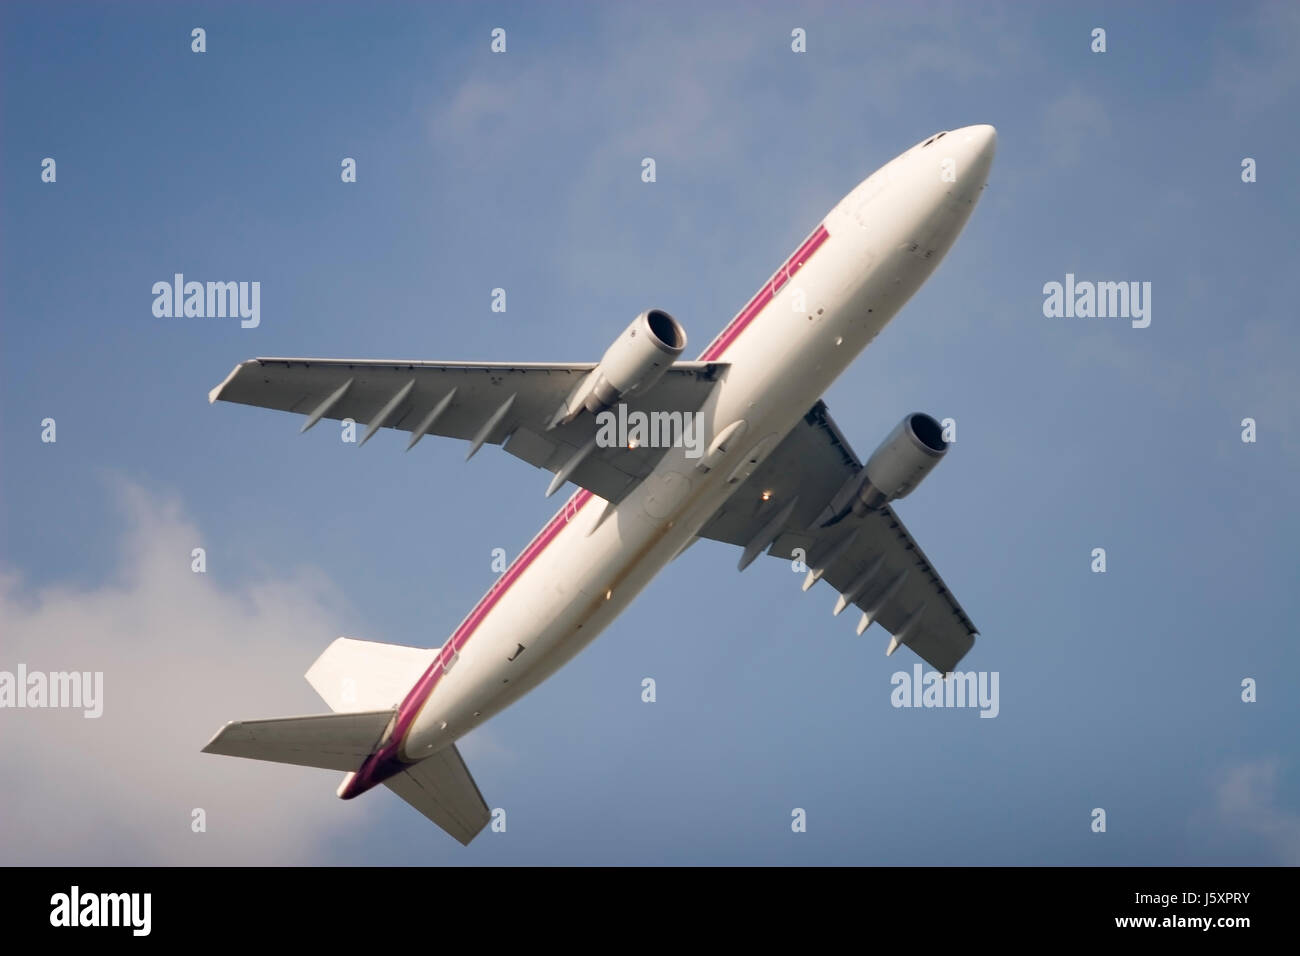 aircraft aeroplane plane airplane traveling trip journey holiday vacation Stock Photo